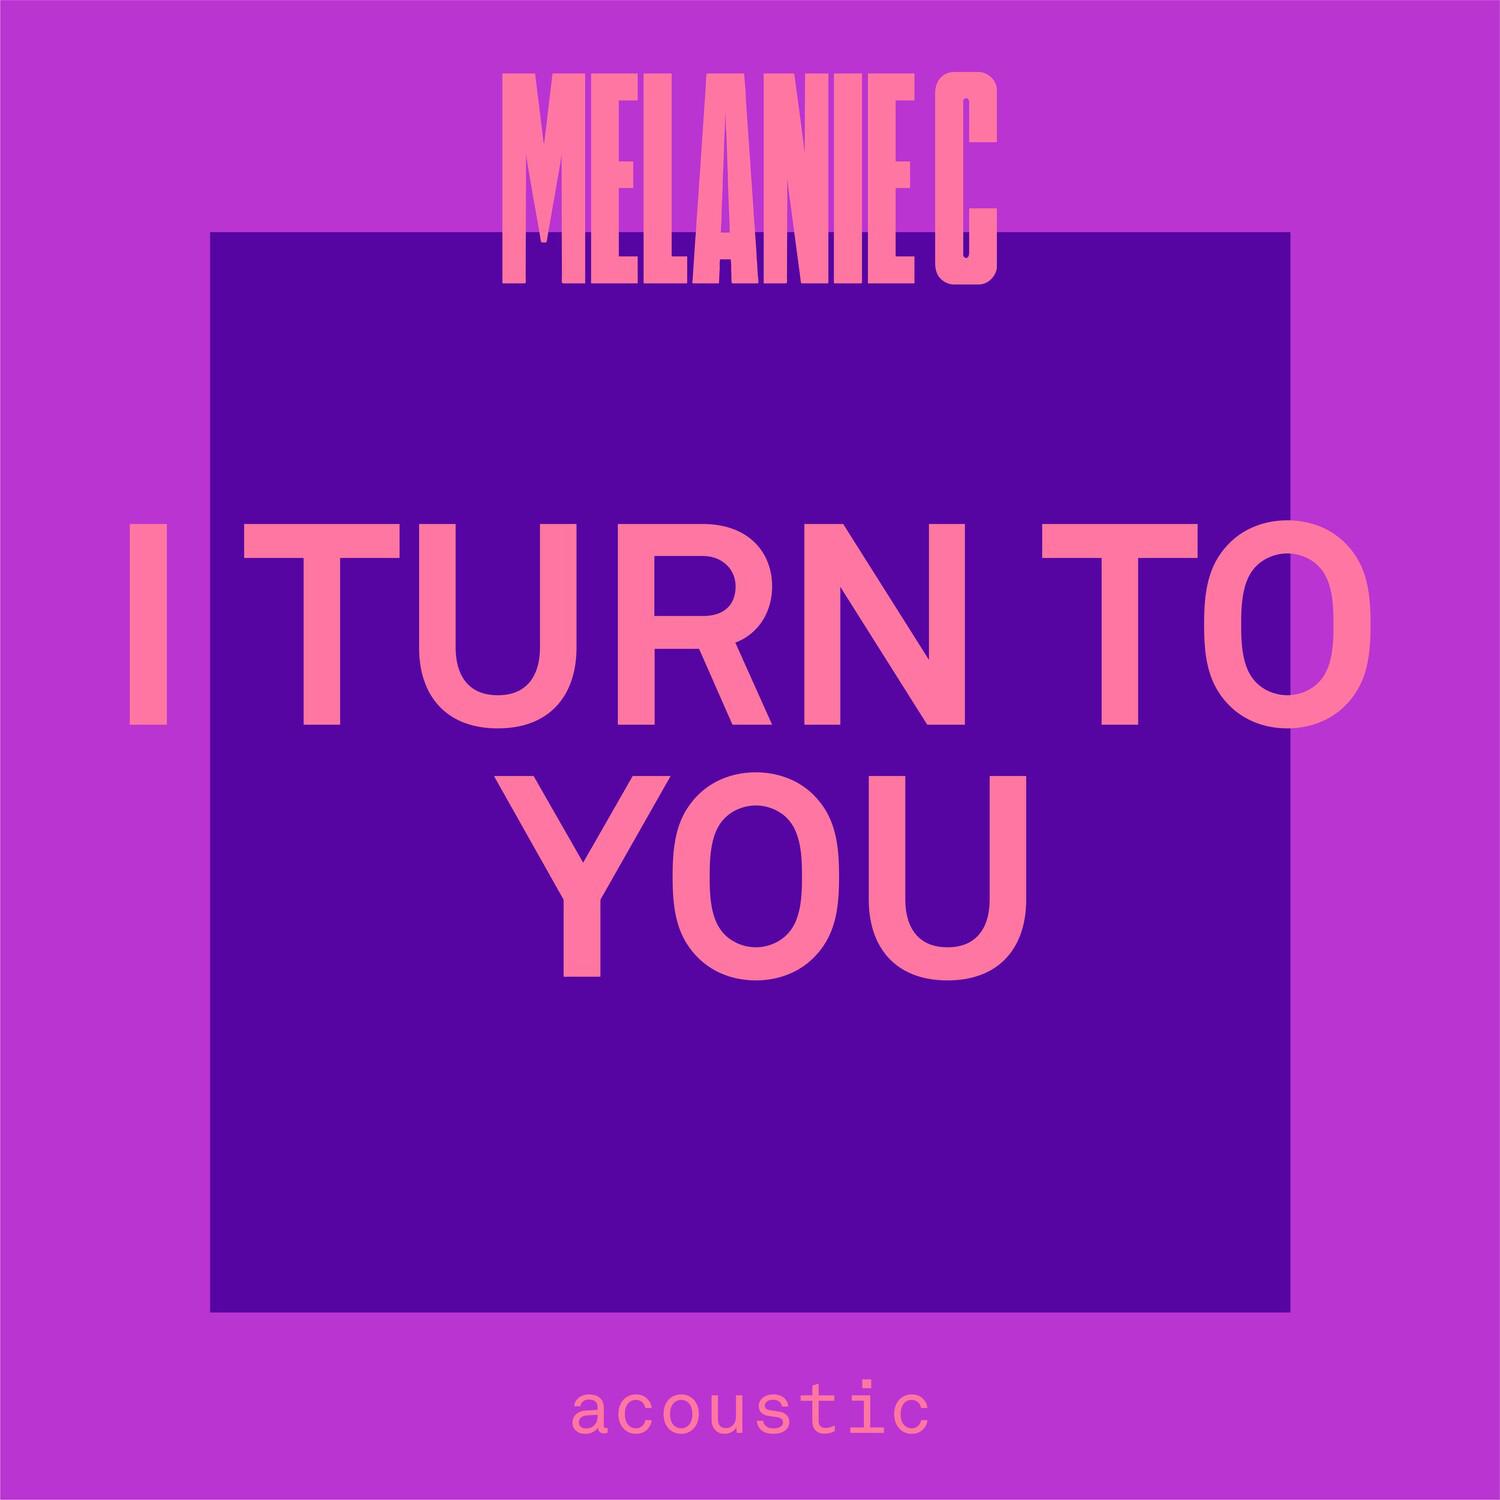 Melanie C - Into You (Acoustic)